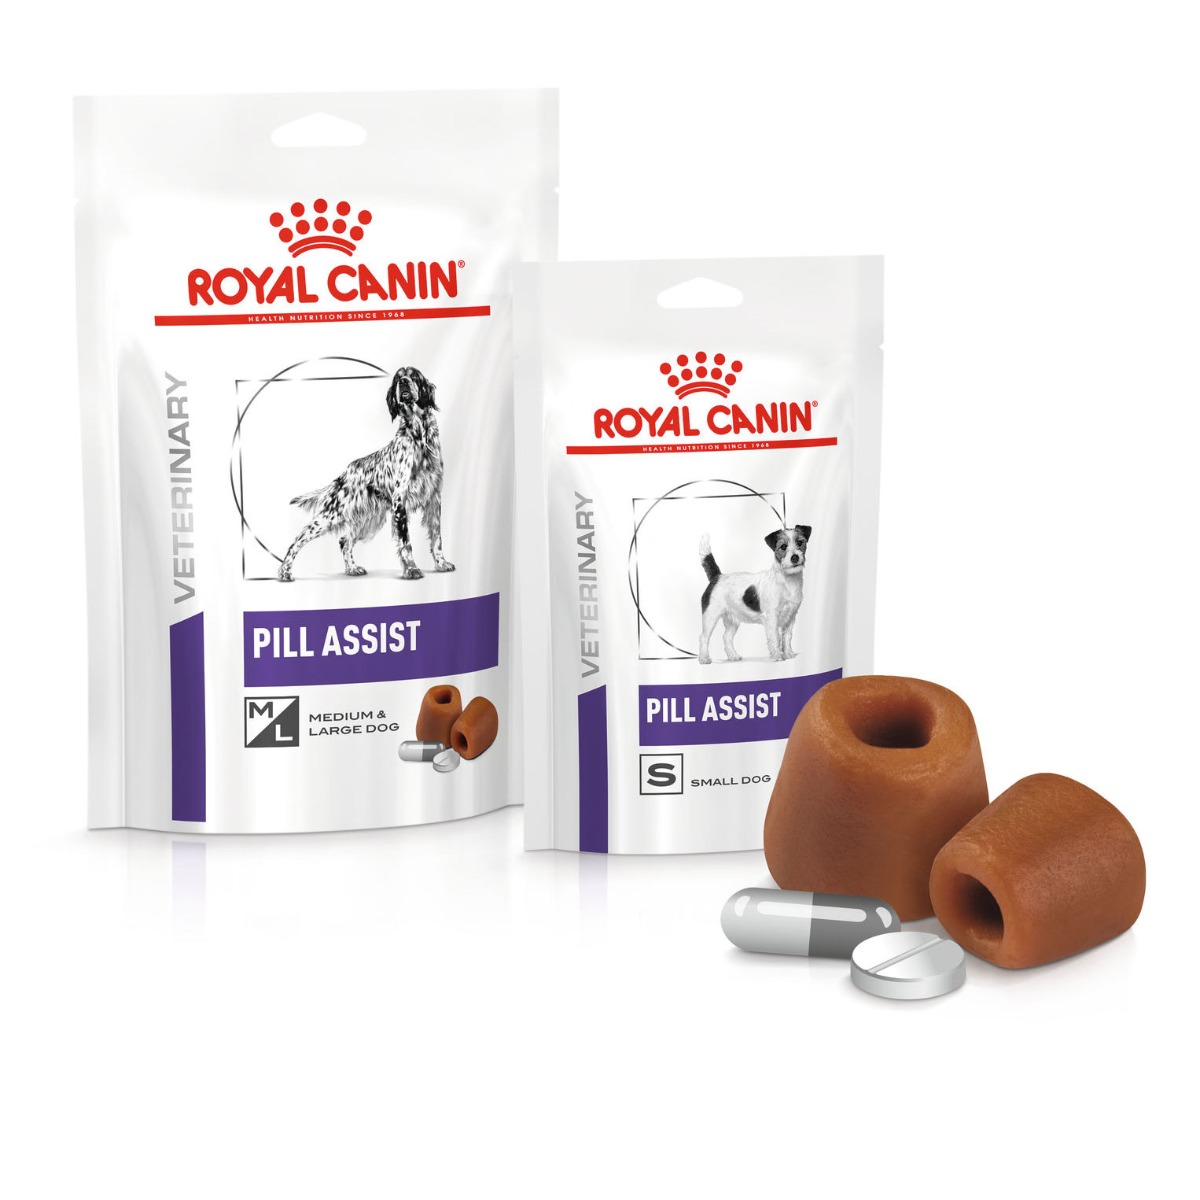 Royal Canin Pill Assist